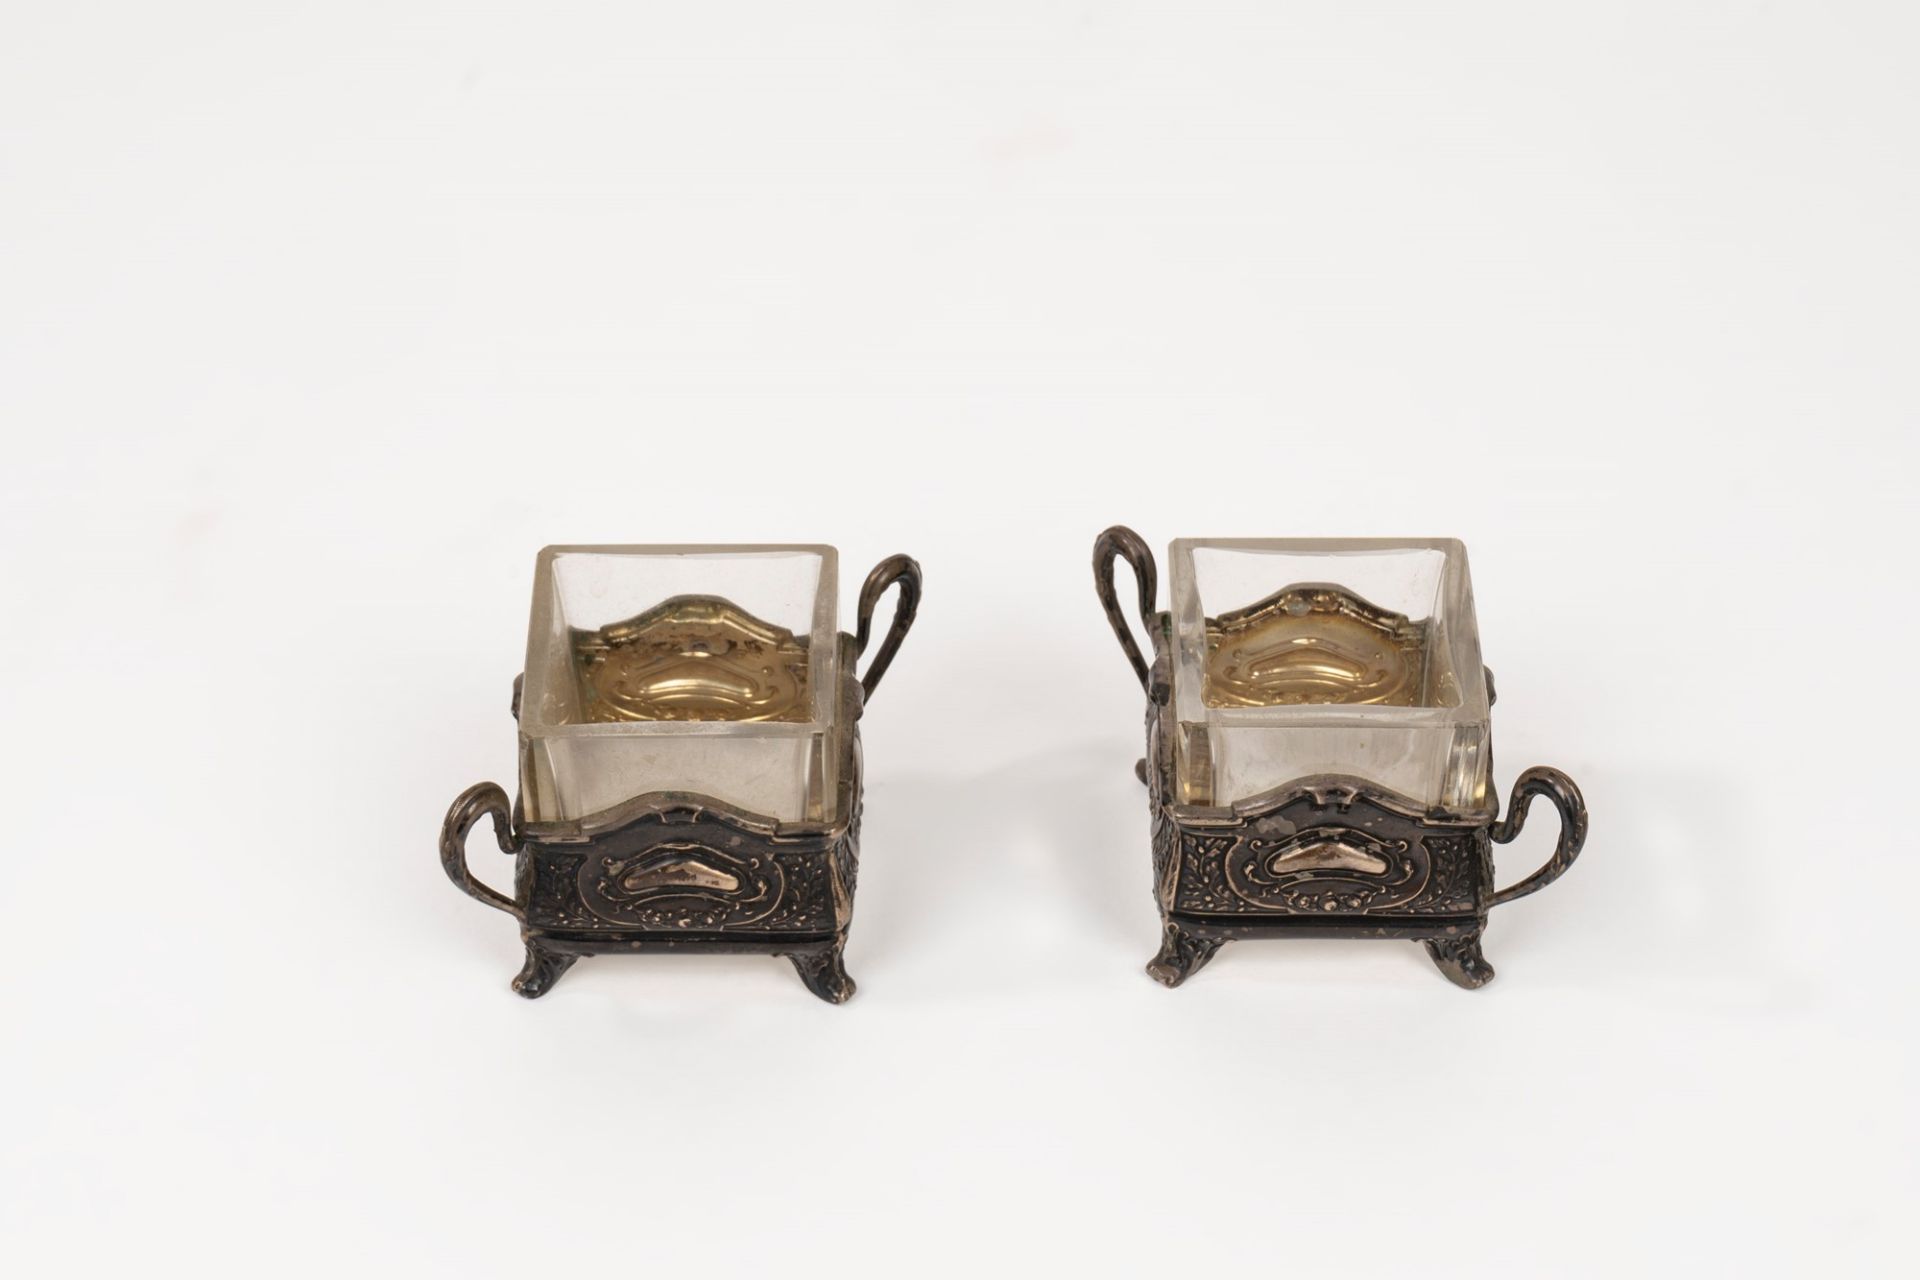 Pair of silver salt shakers, 19th century